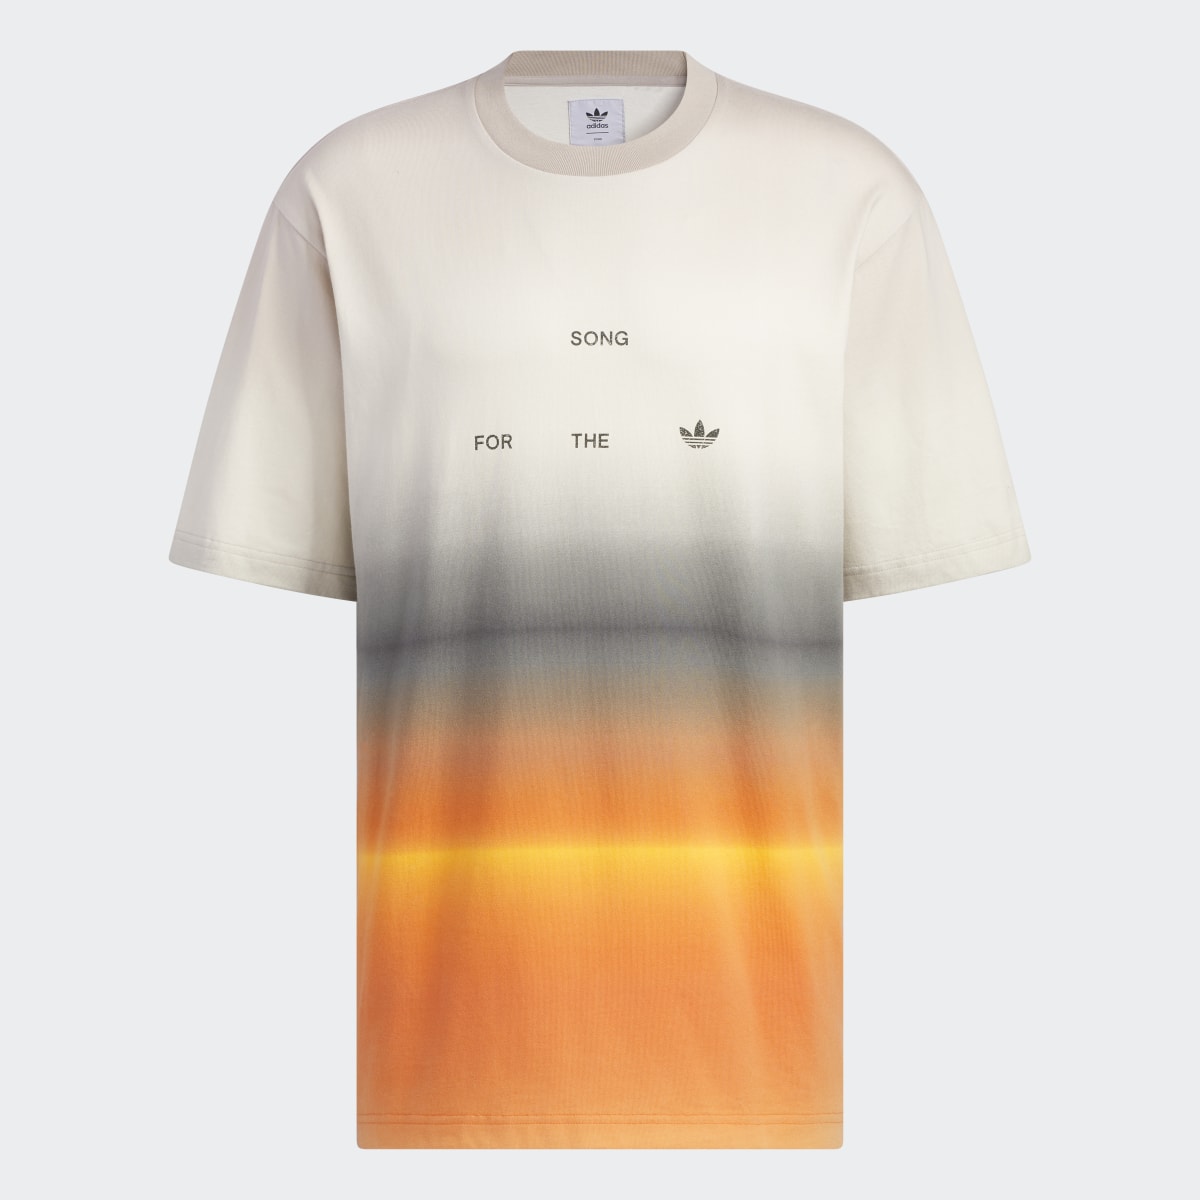 Adidas SFTM T-Shirt – Genderneutral. 5